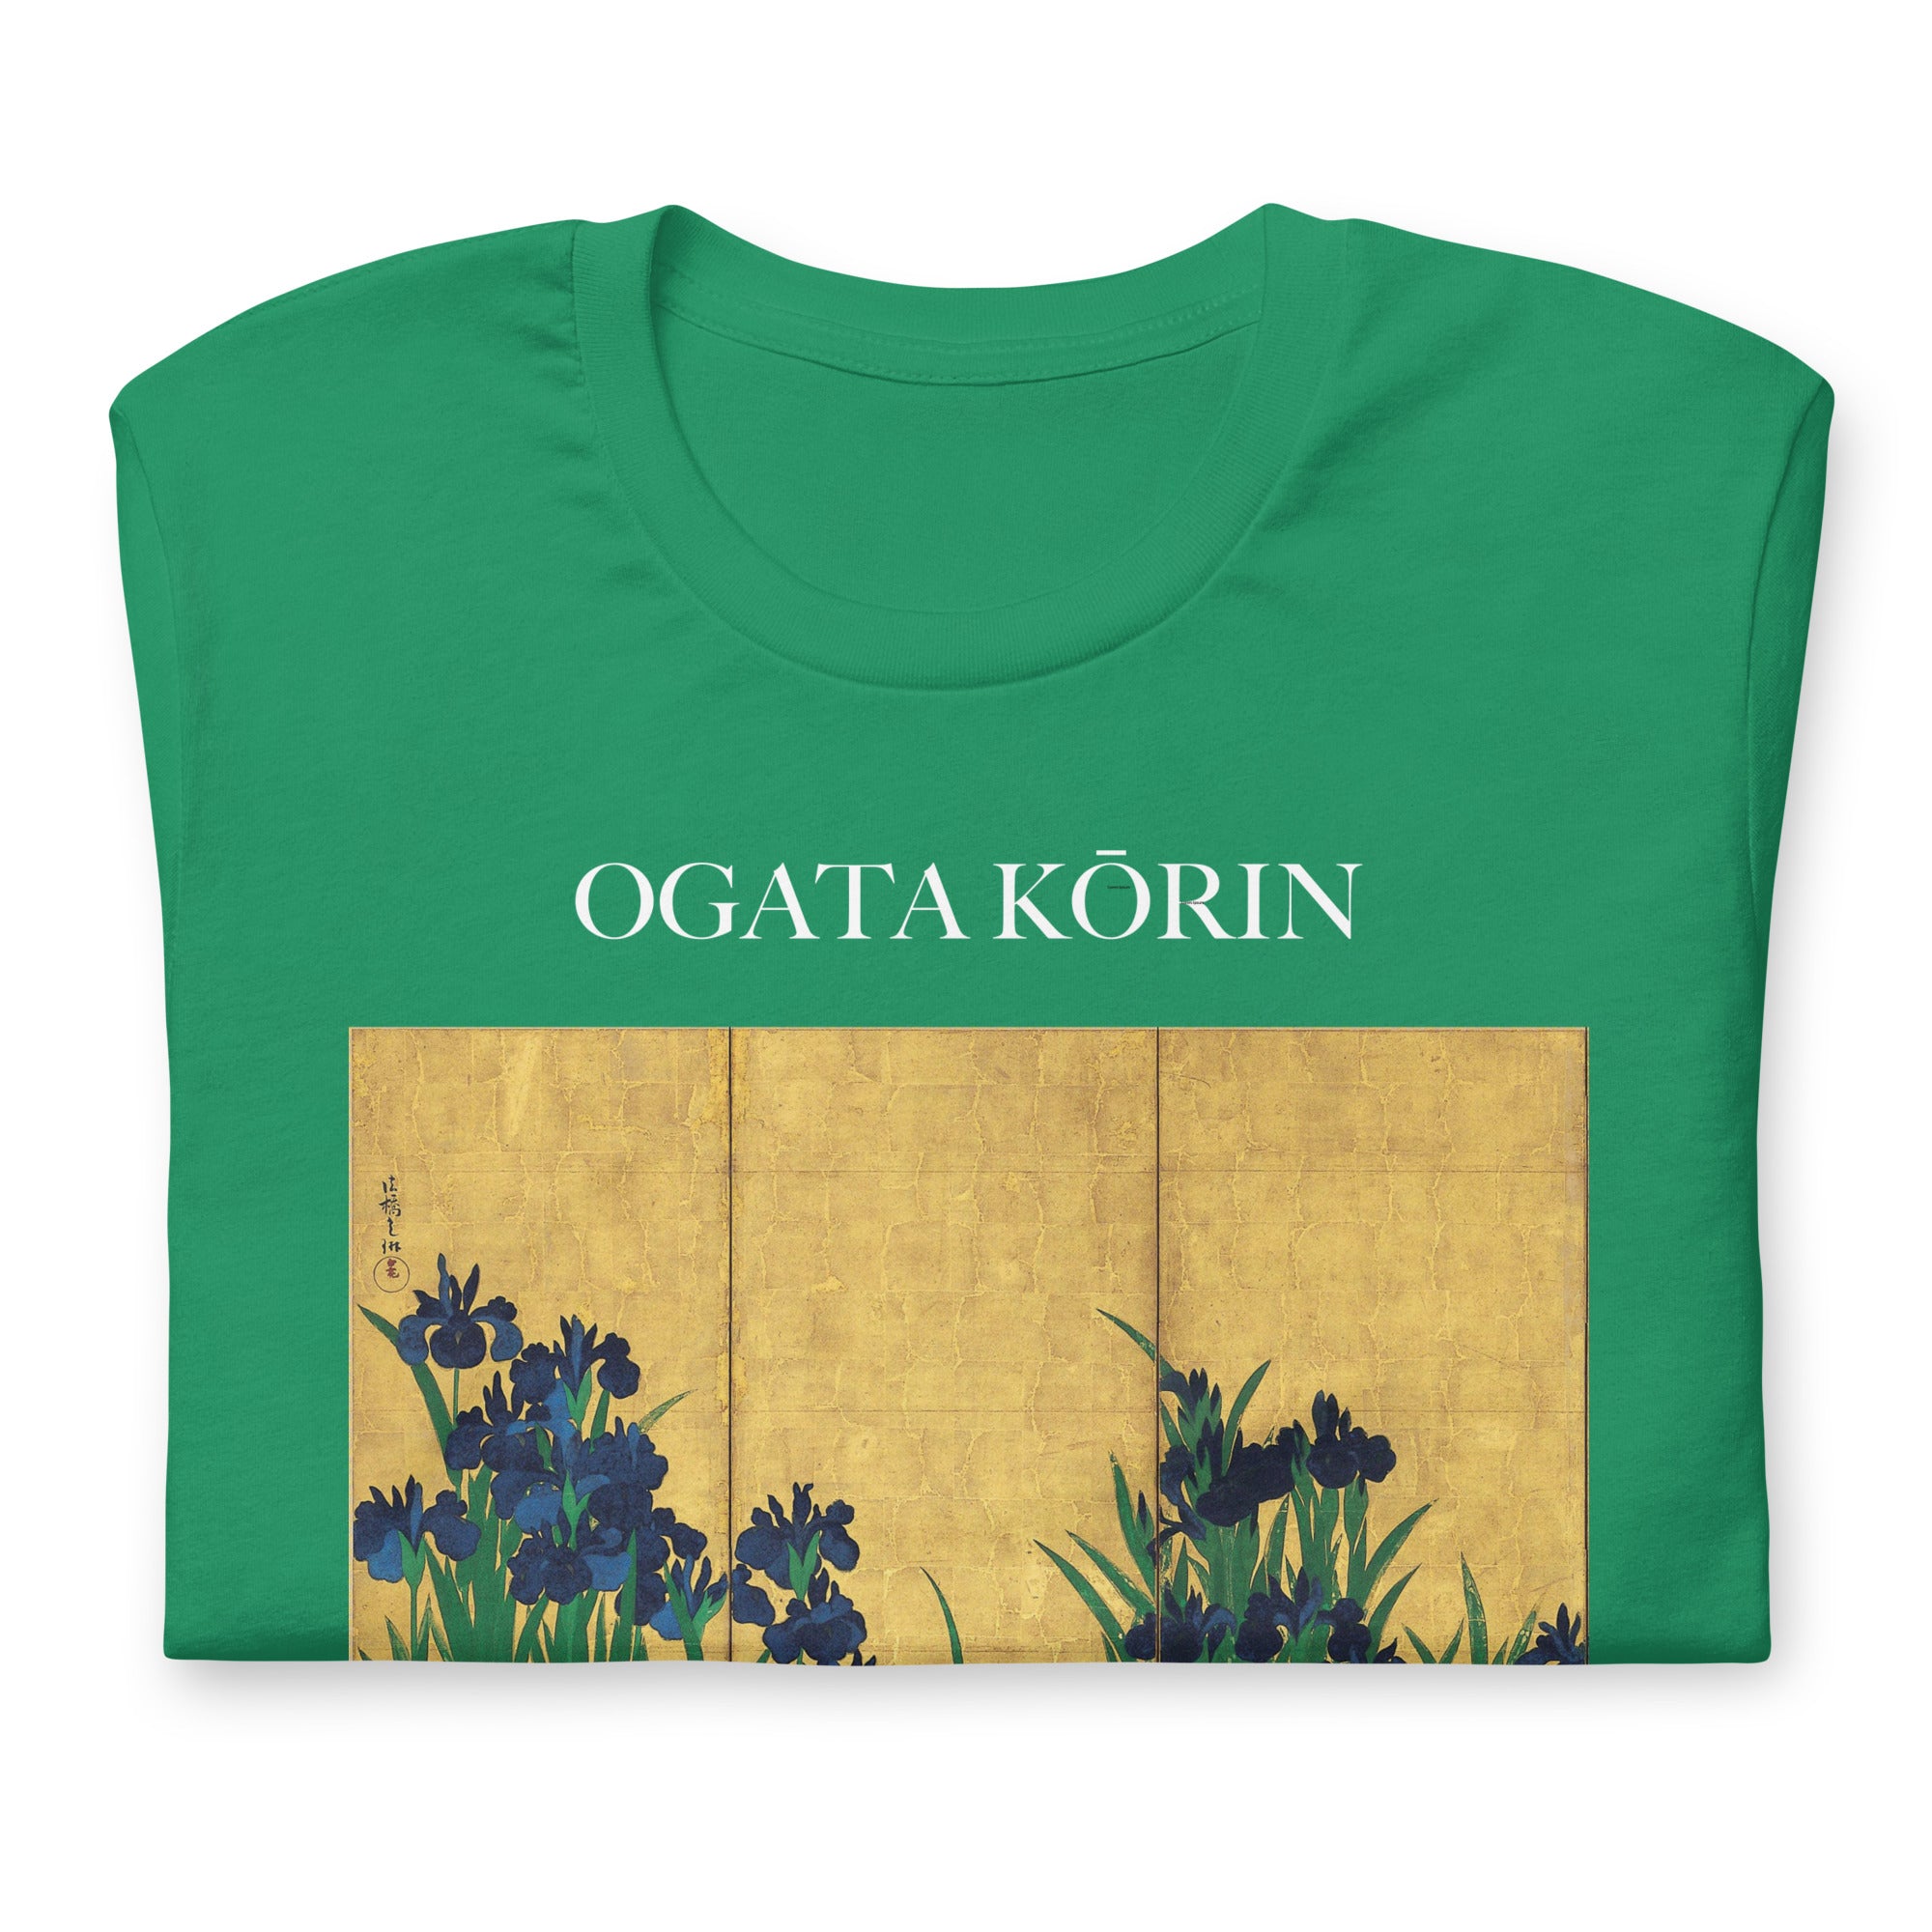 Ogata Kōrin 'Irises Screen' Berühmtes Gemälde T-Shirt | Unisex Klassisches Kunst T-Shirt